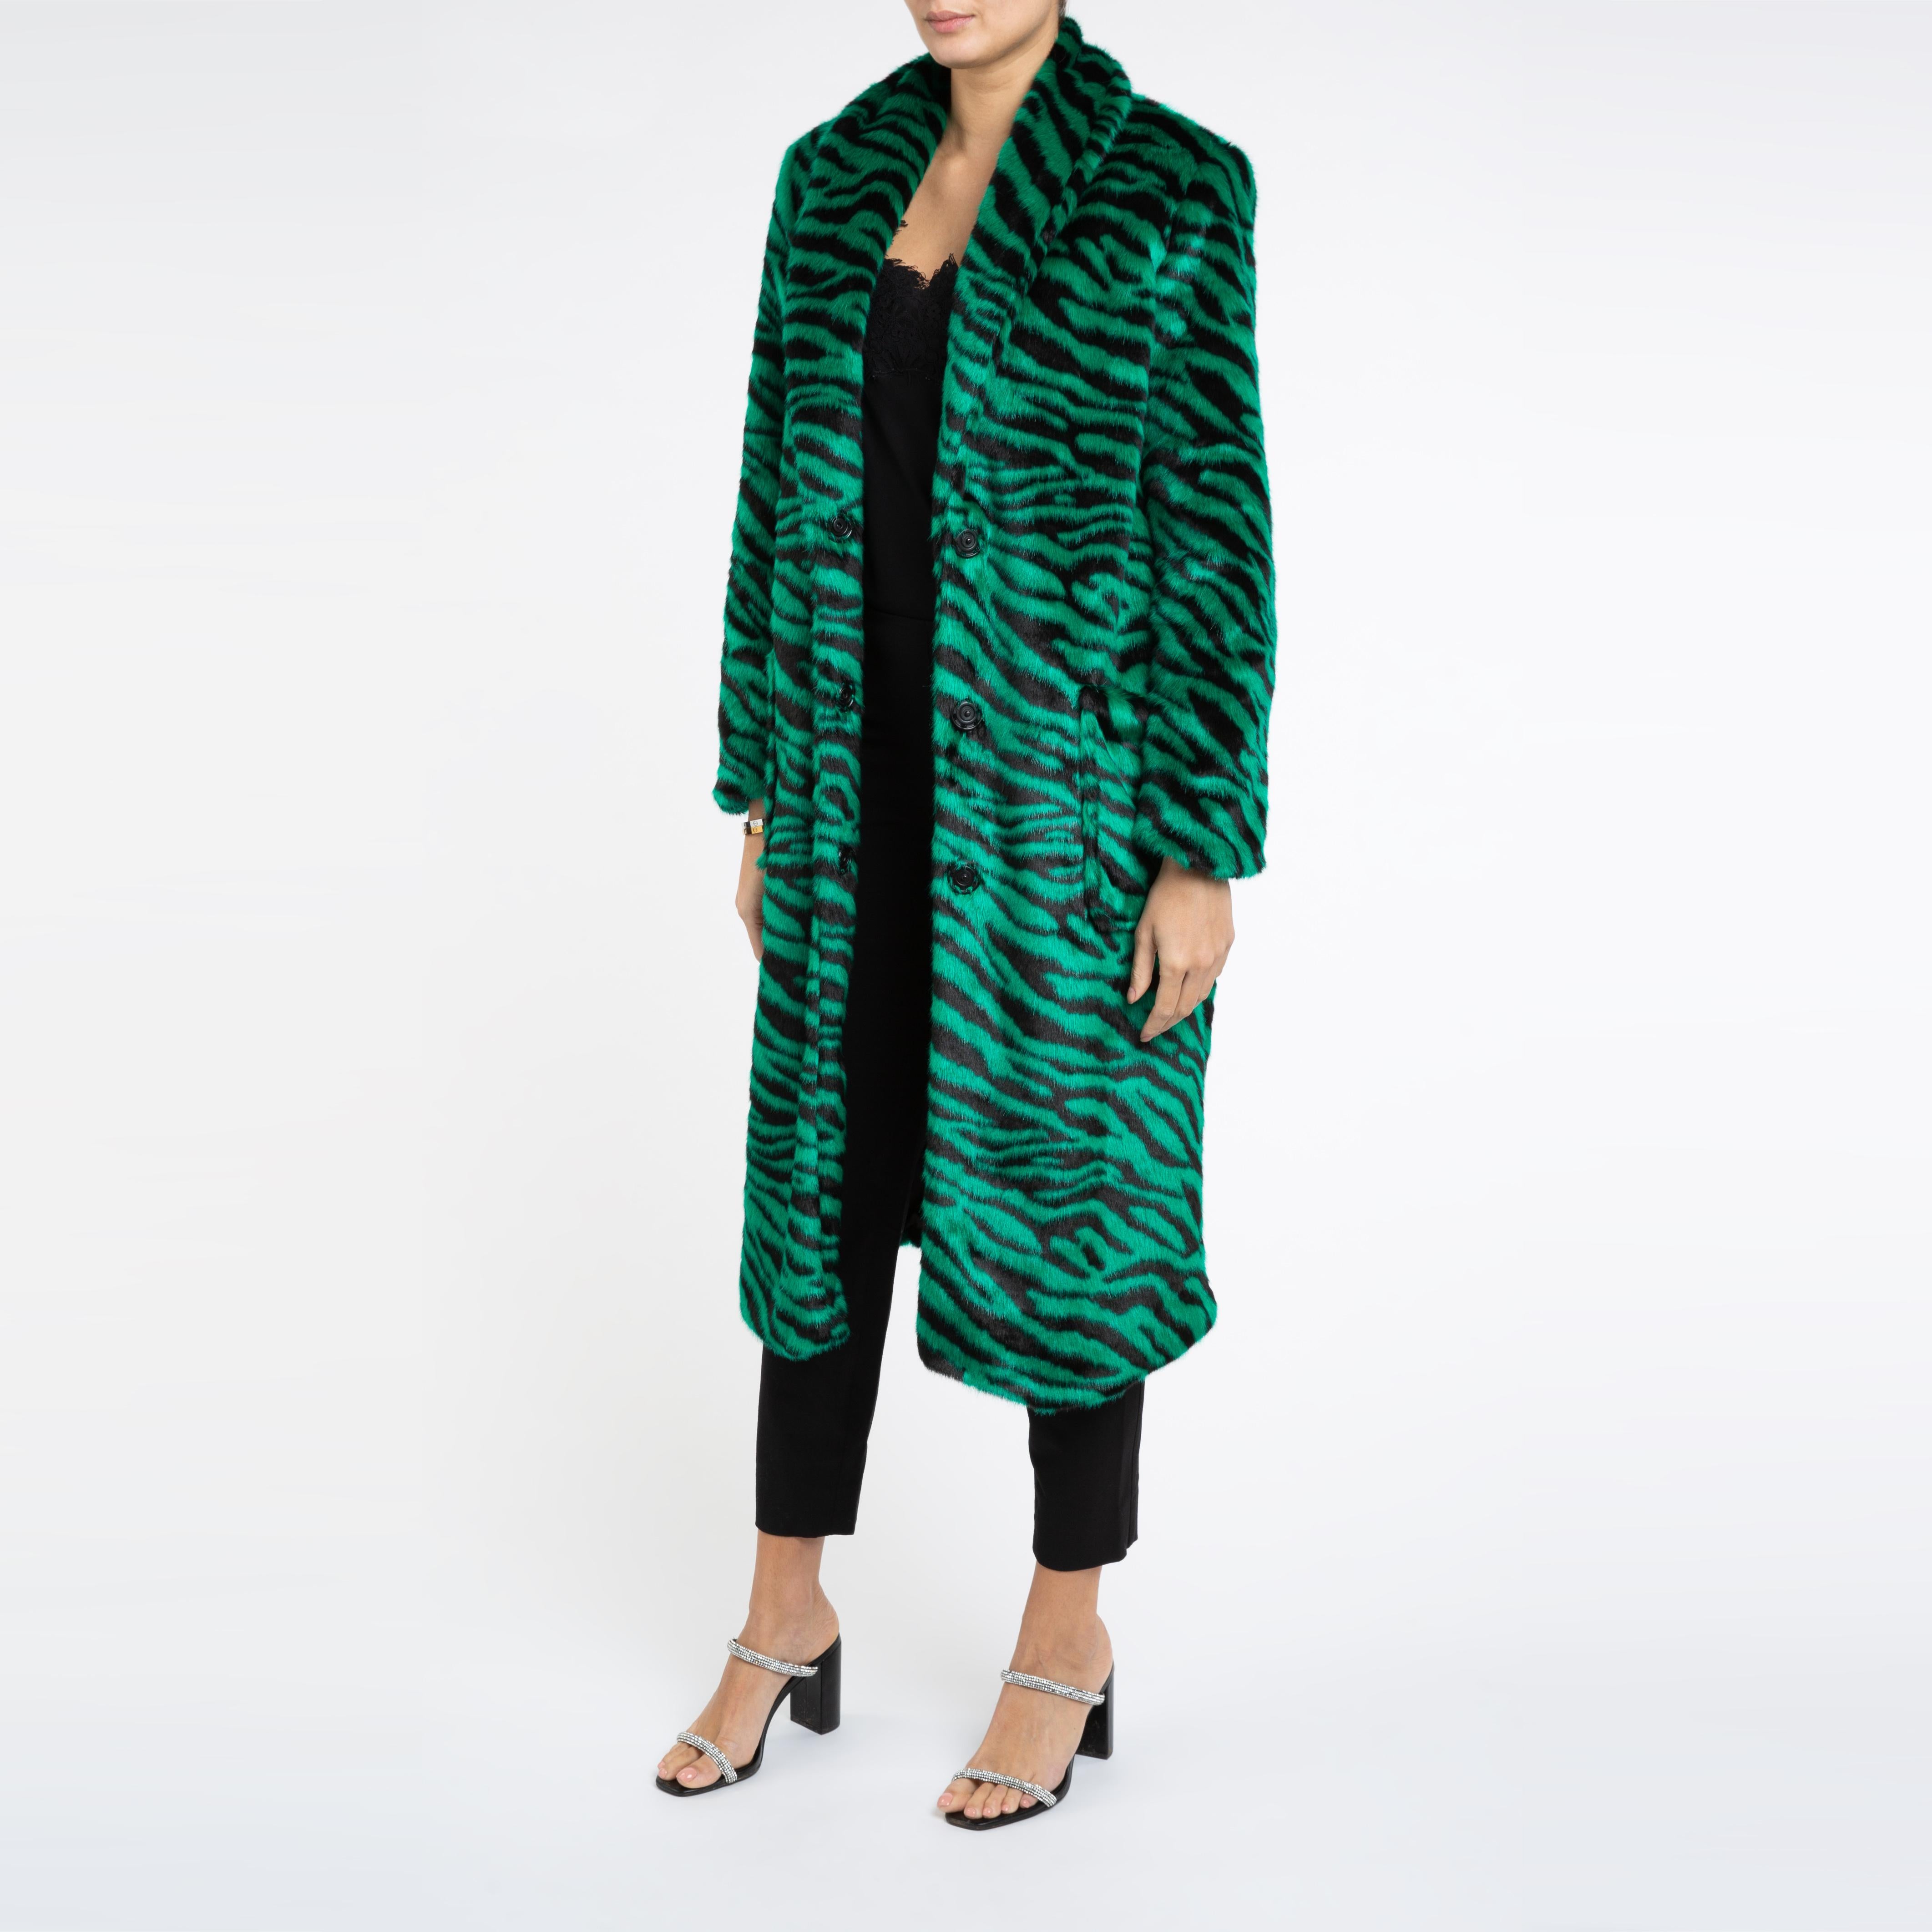 Women's Verheyen London Esmeralda Faux Fur Coat in Emerald Green Zebra Print size uk 10 For Sale